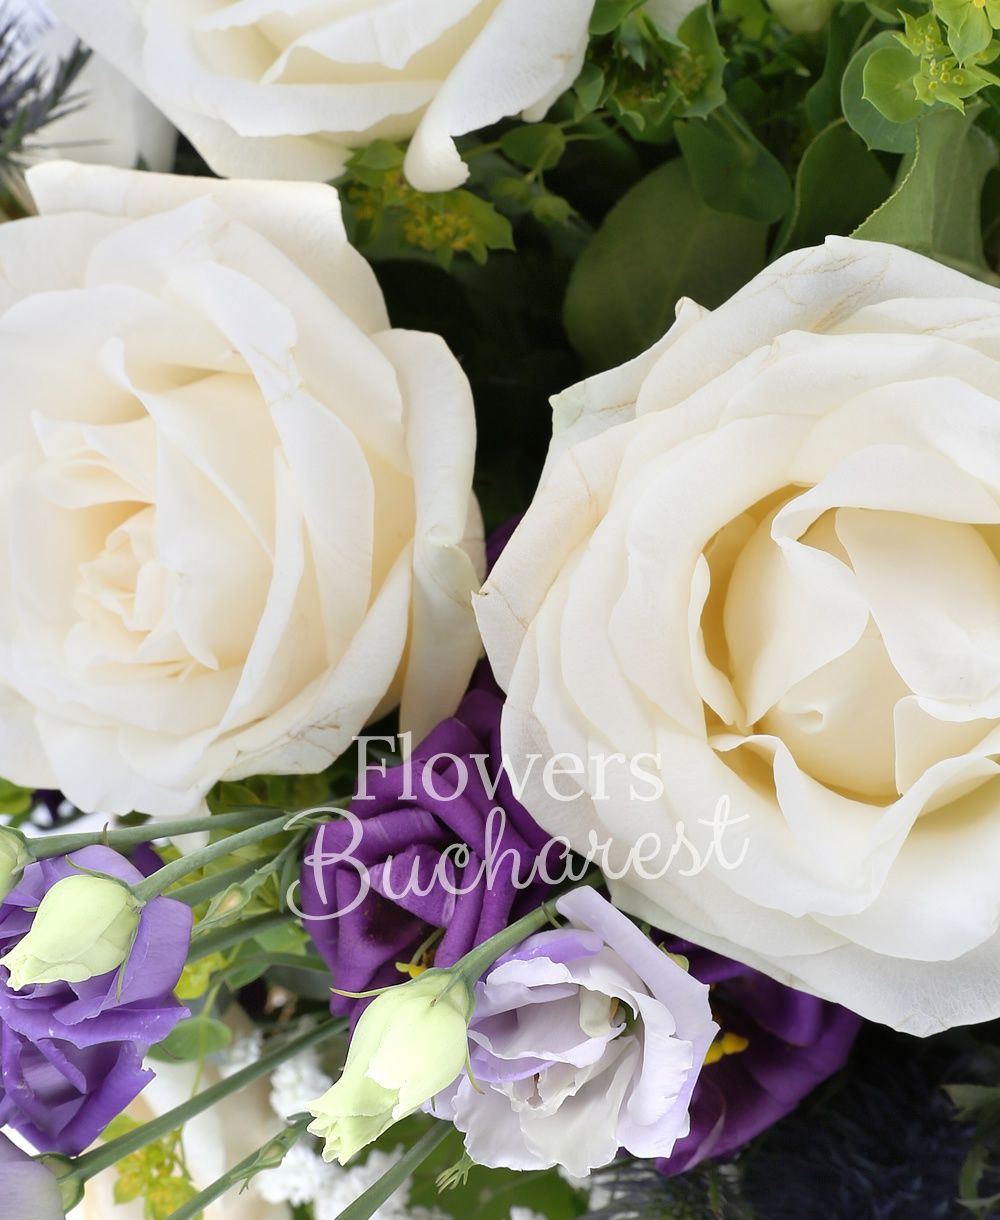 5 white roses, 3 purple lisianthus, 3 eryngium, 7 white freesias, greenery